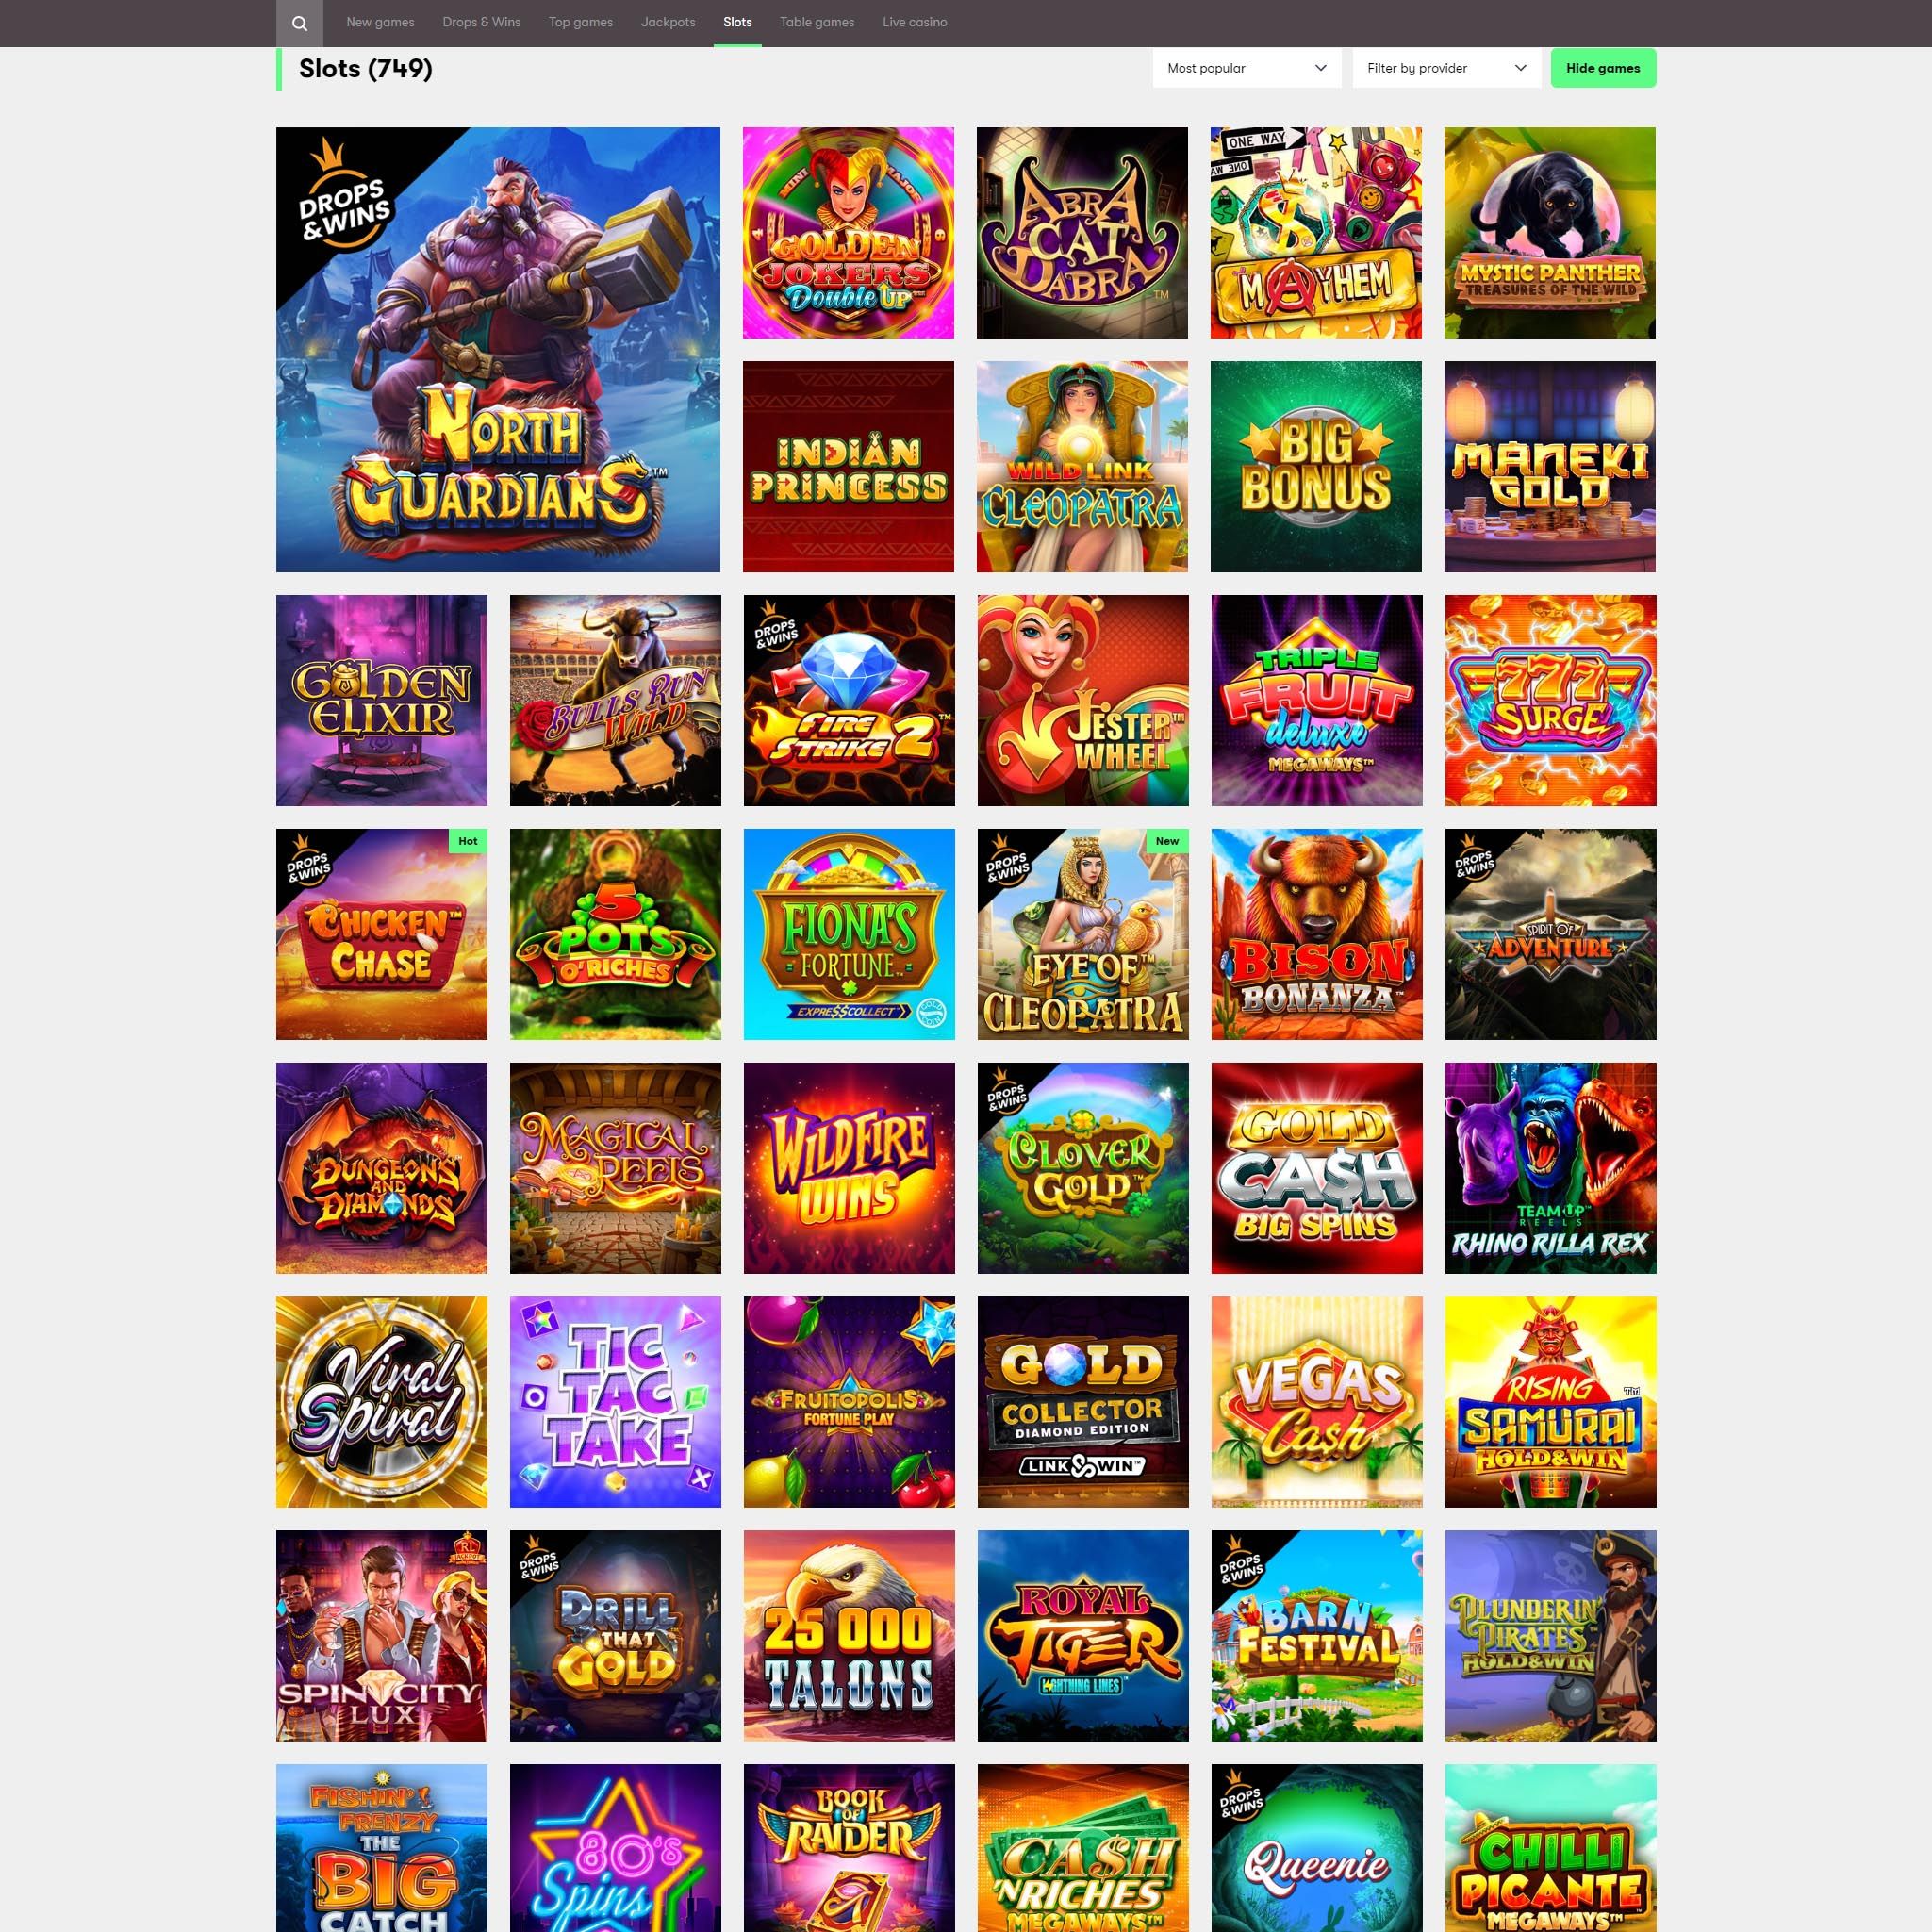 10bet Casino full games catalogue